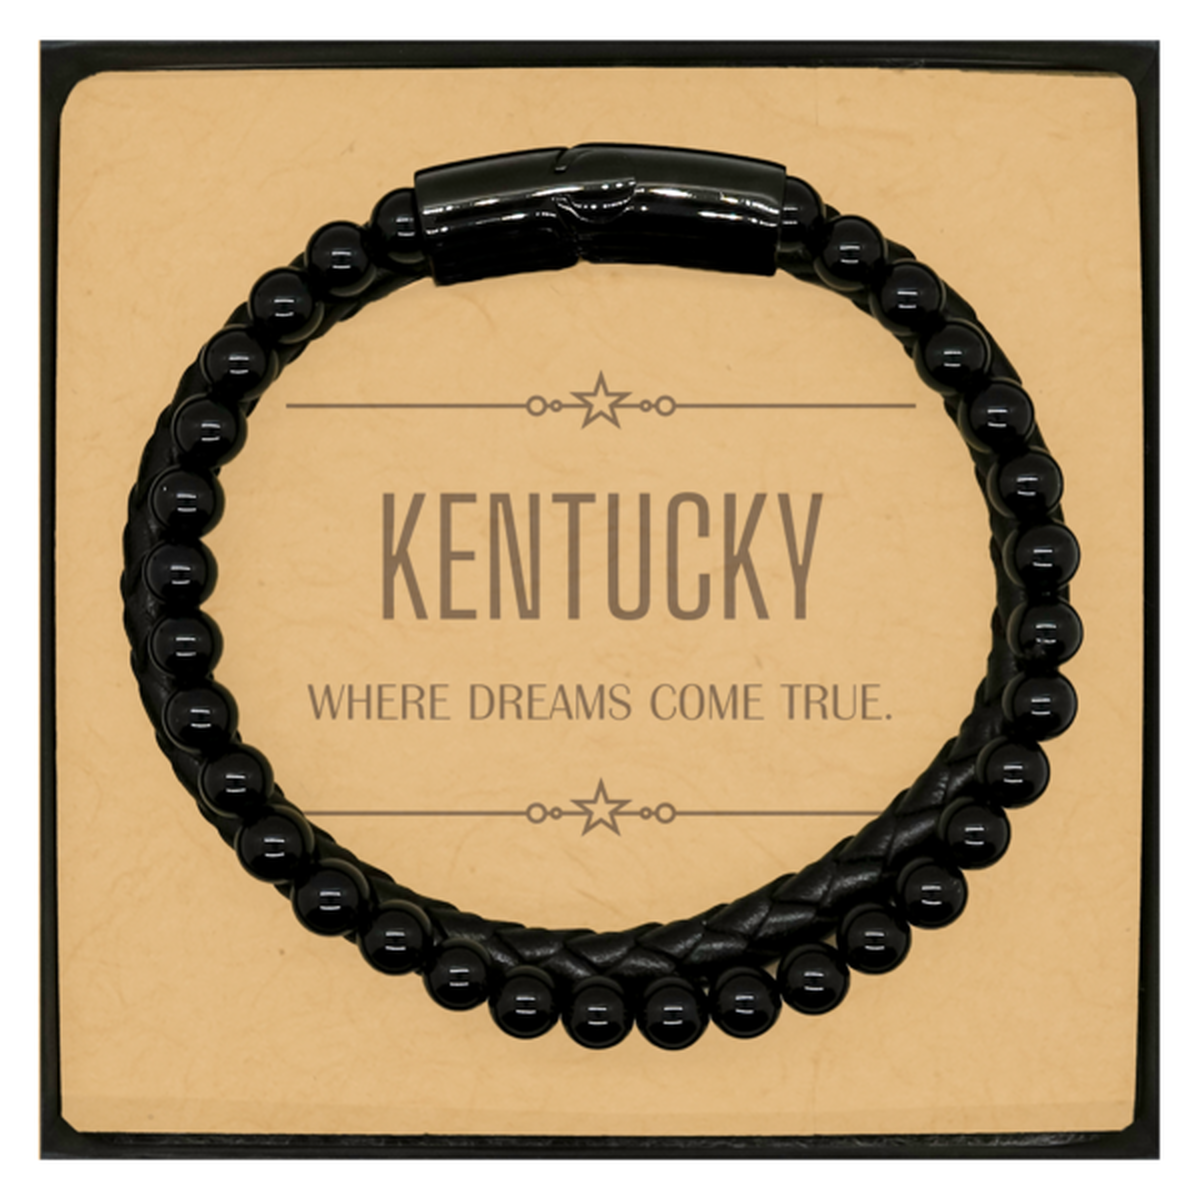 Love Kentucky State Stone Leather Bracelets, Kentucky Where dreams come true, Birthday Christmas Inspirational Gifts For Kentucky Men, Women, Friends